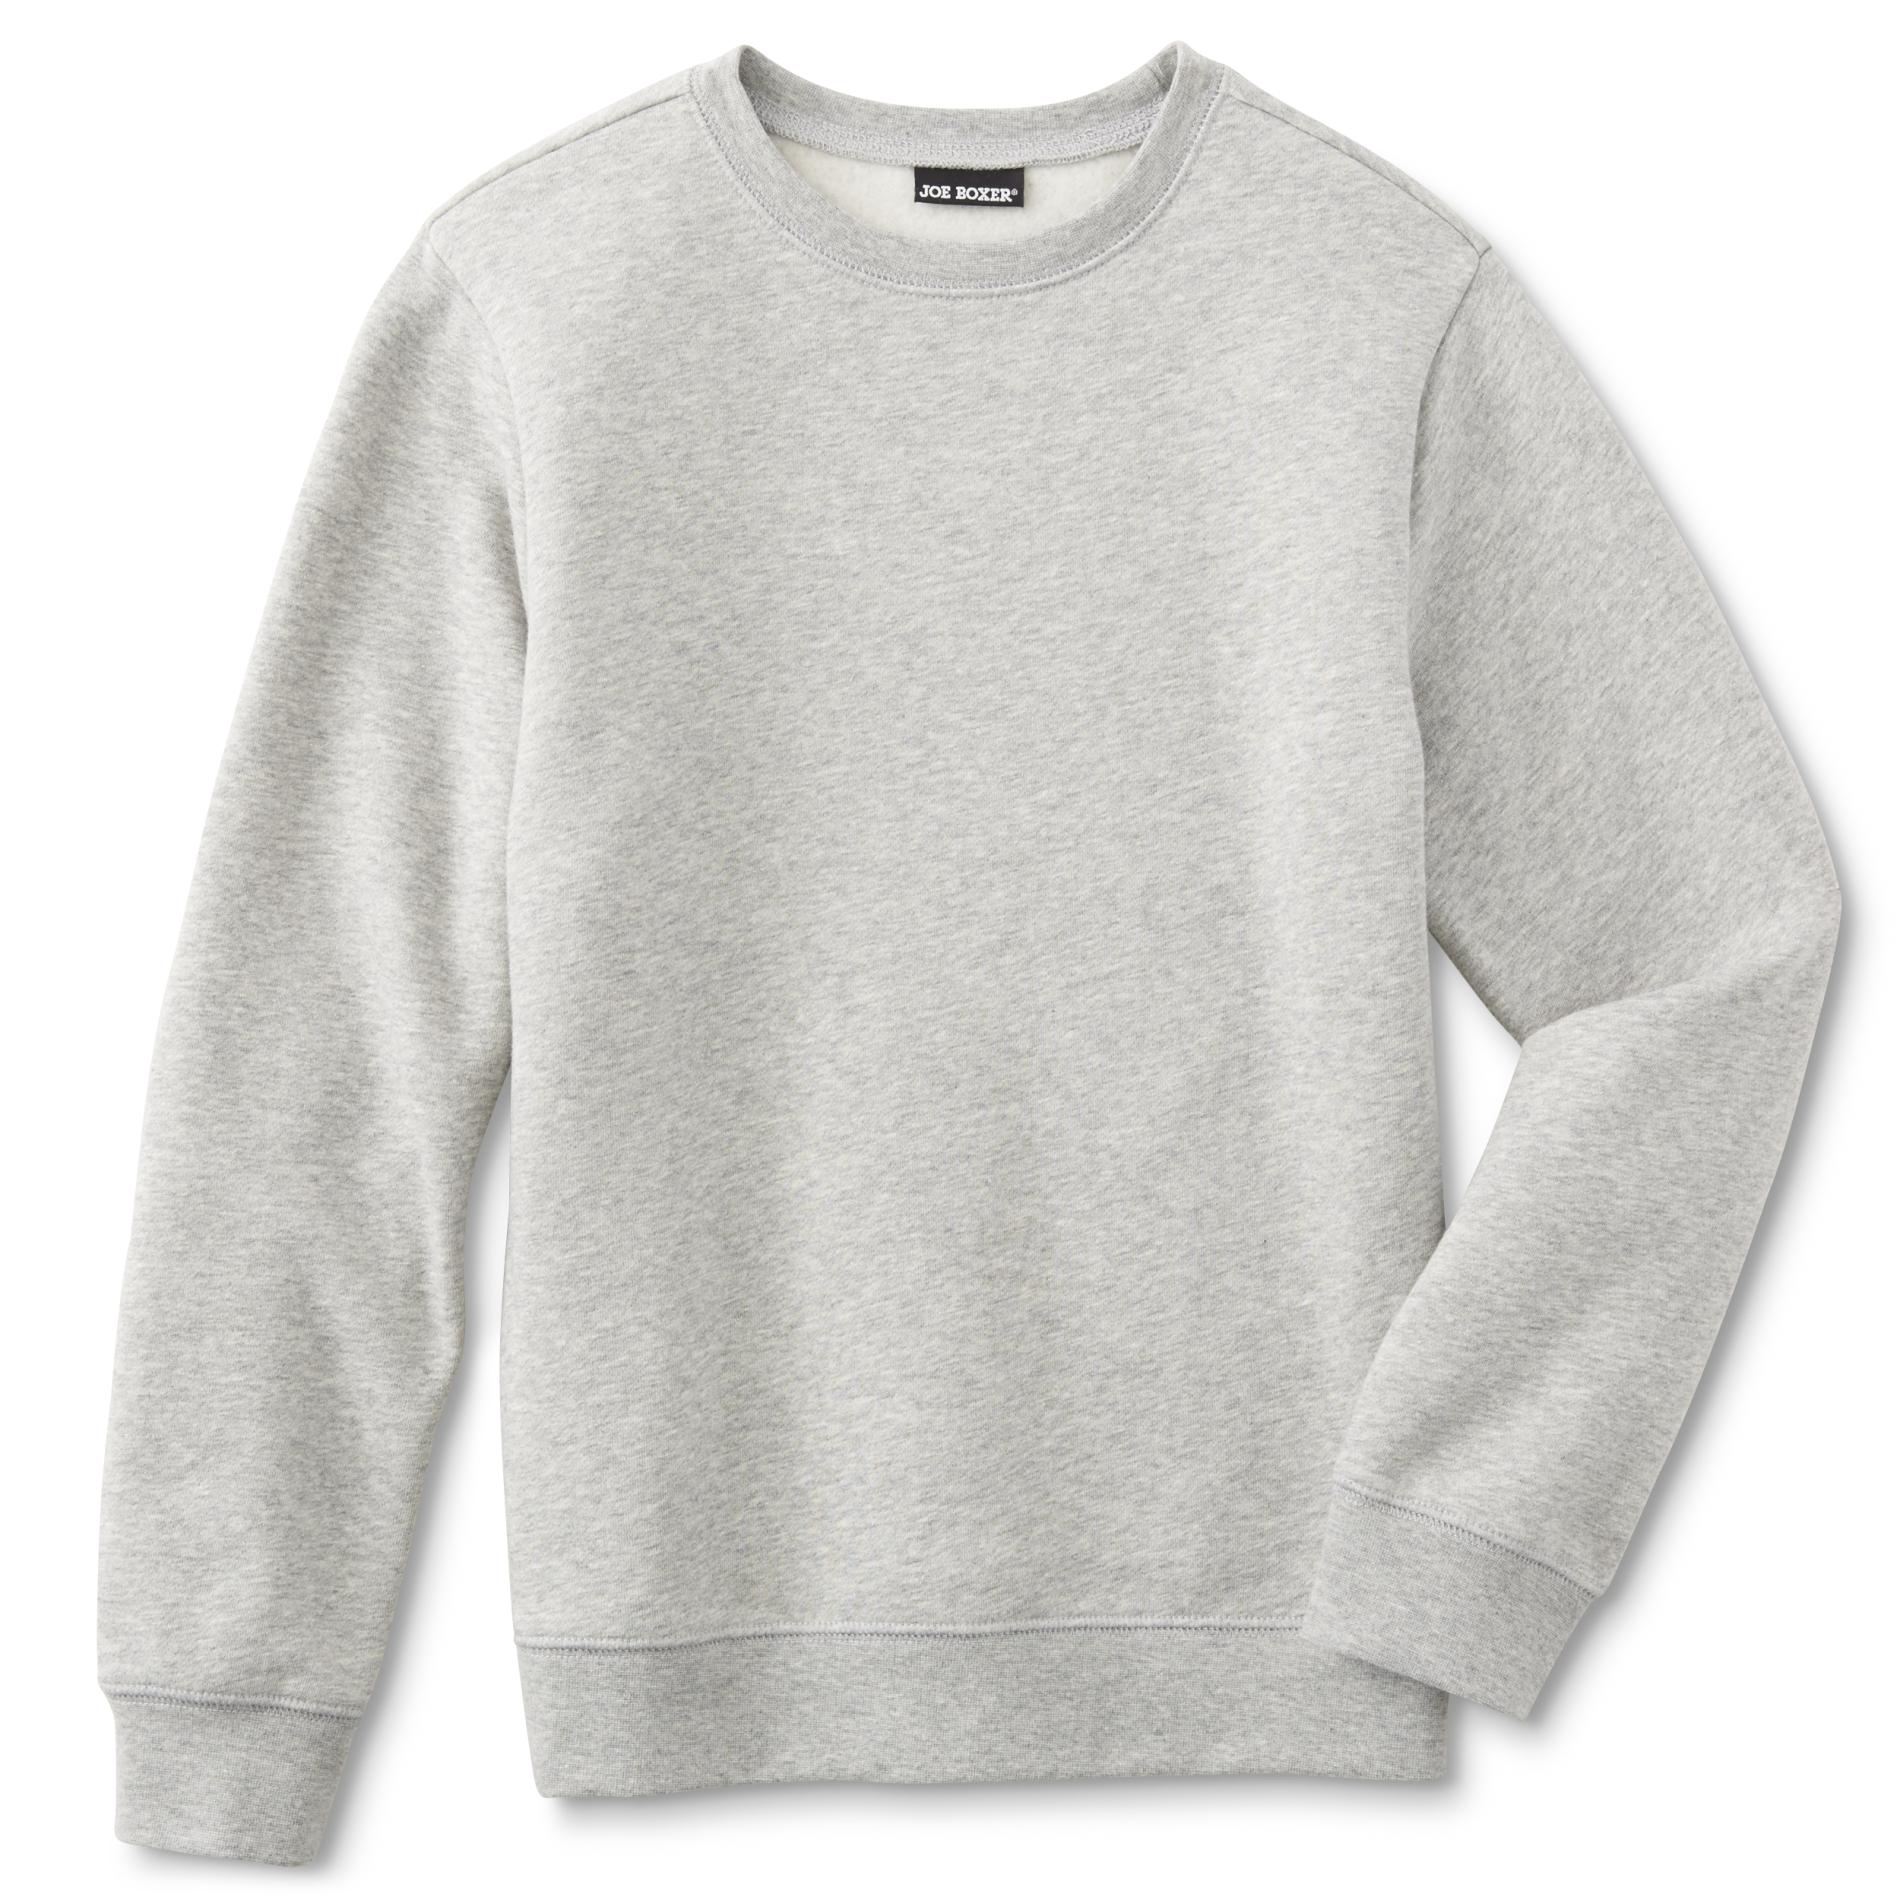 Joe Boxer Cotton Sweatshirt | Kmart.com